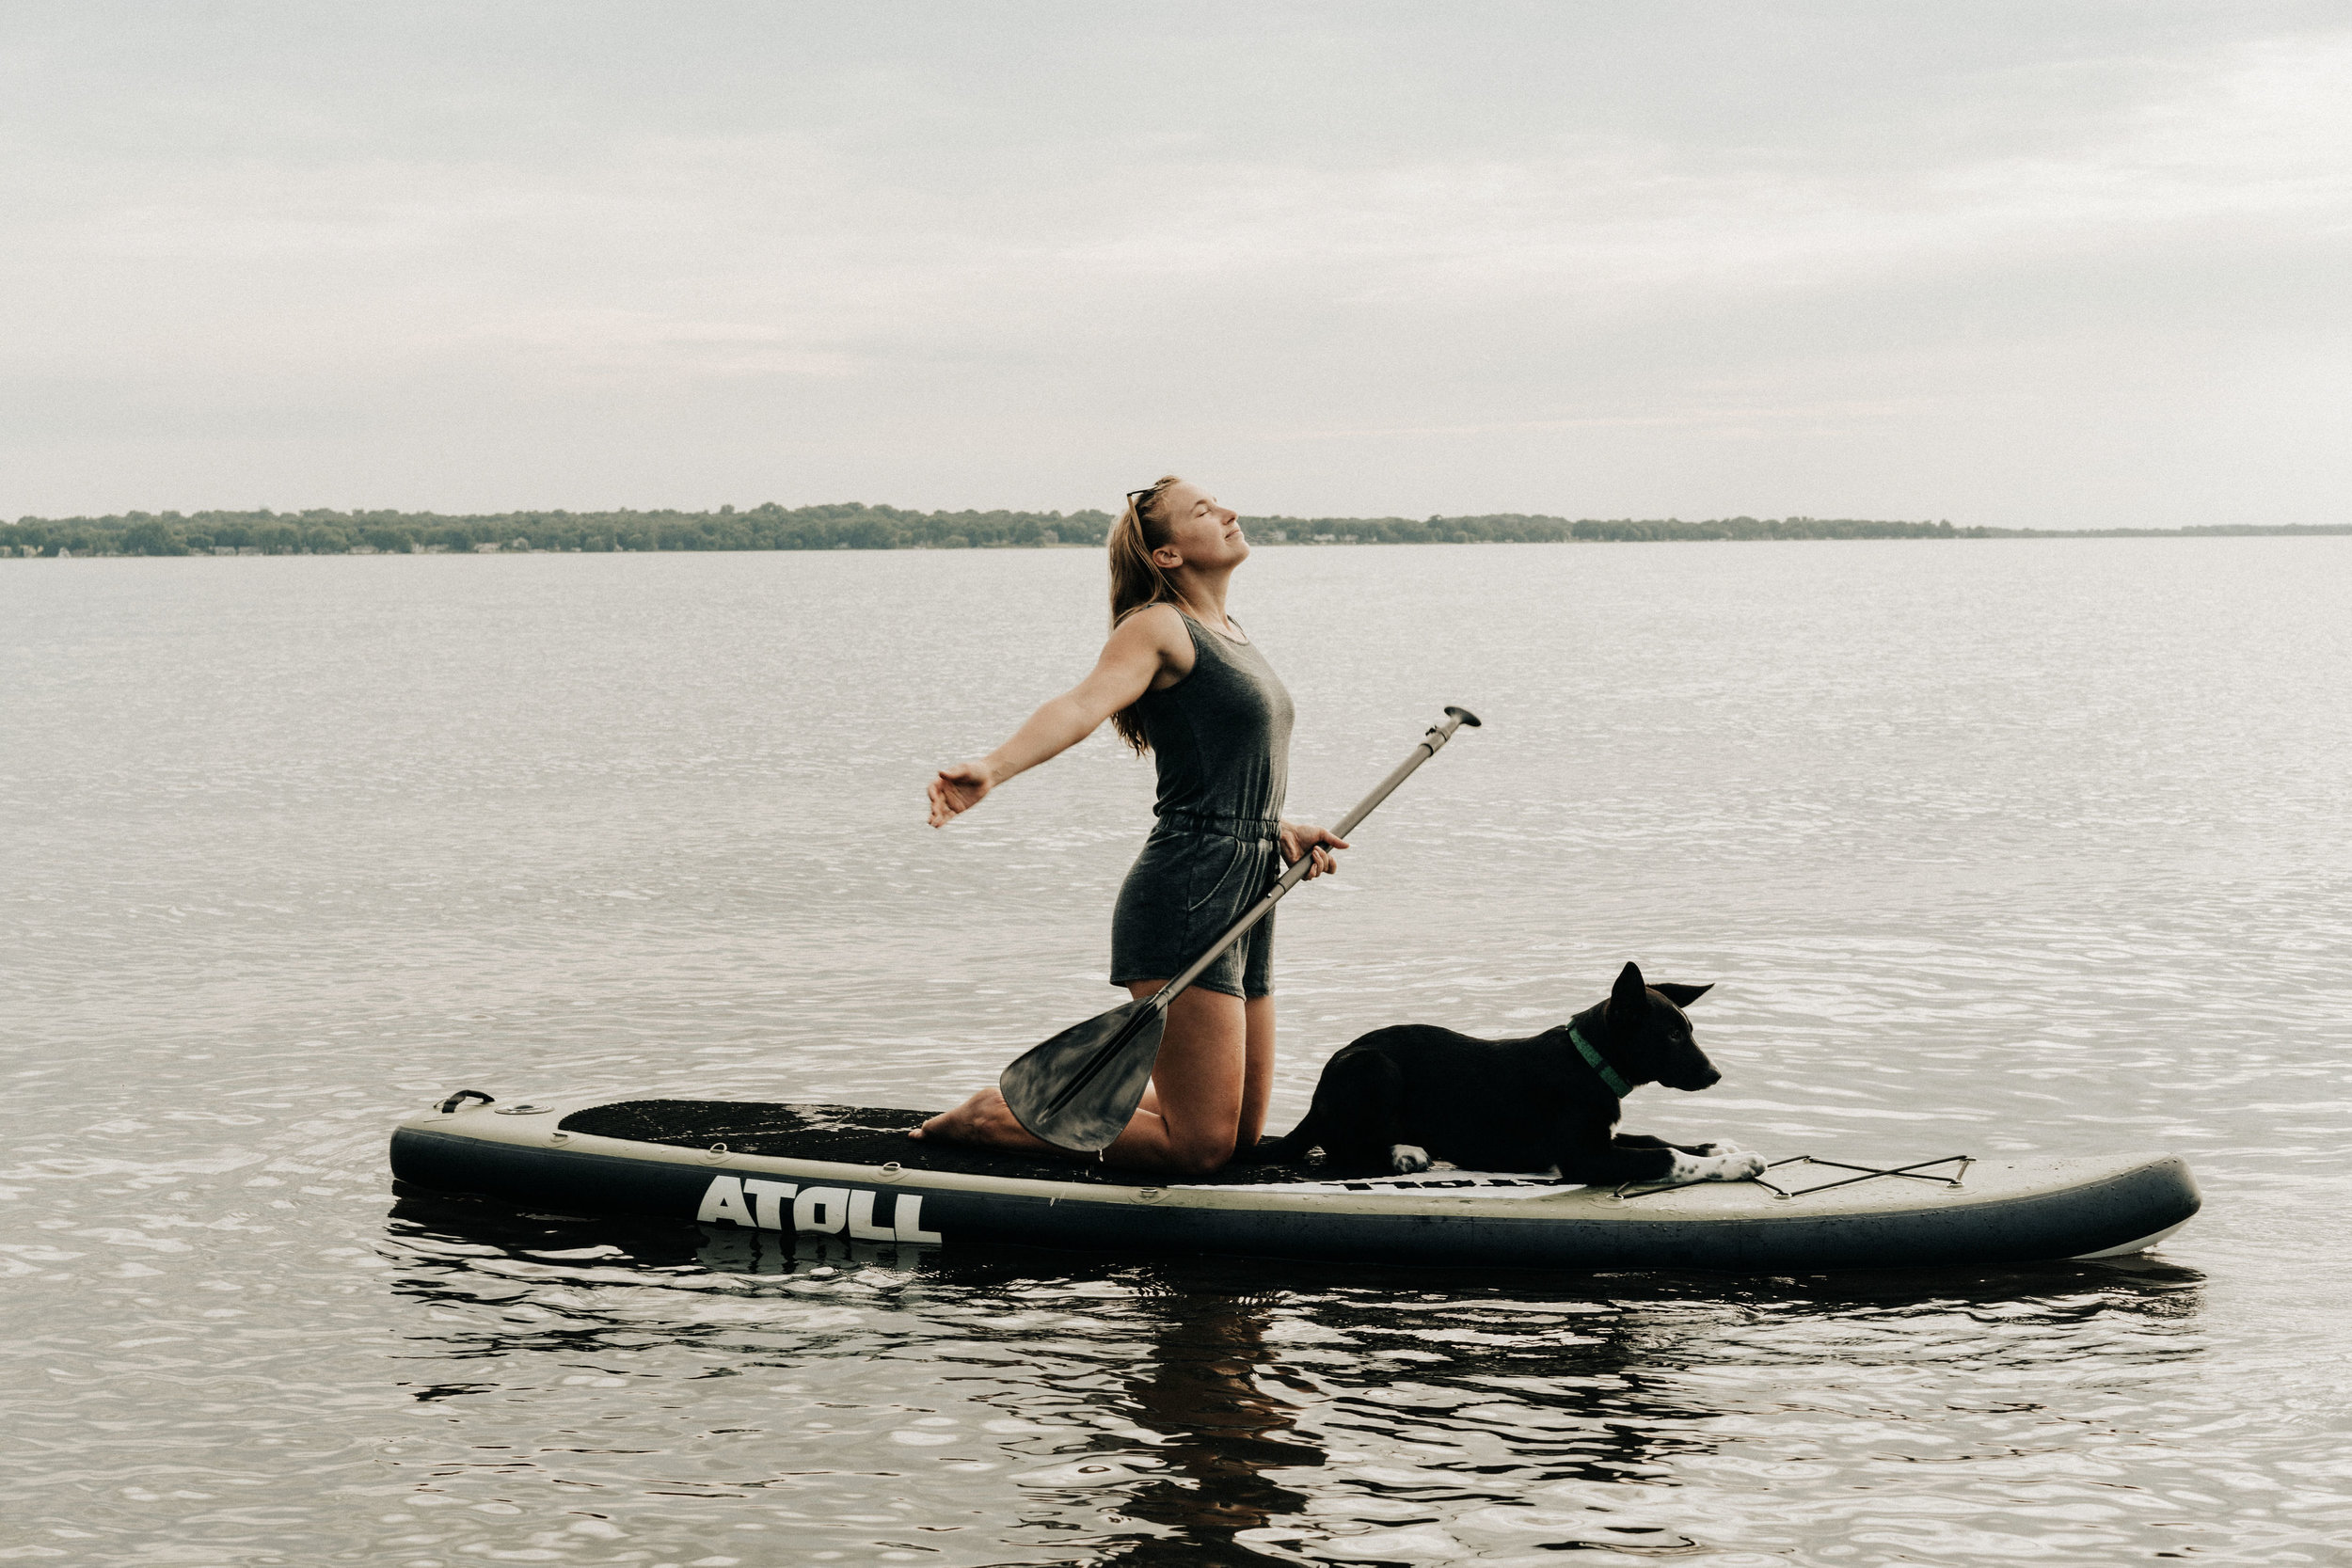 Atoll iSUP Paddle Board girl and dog